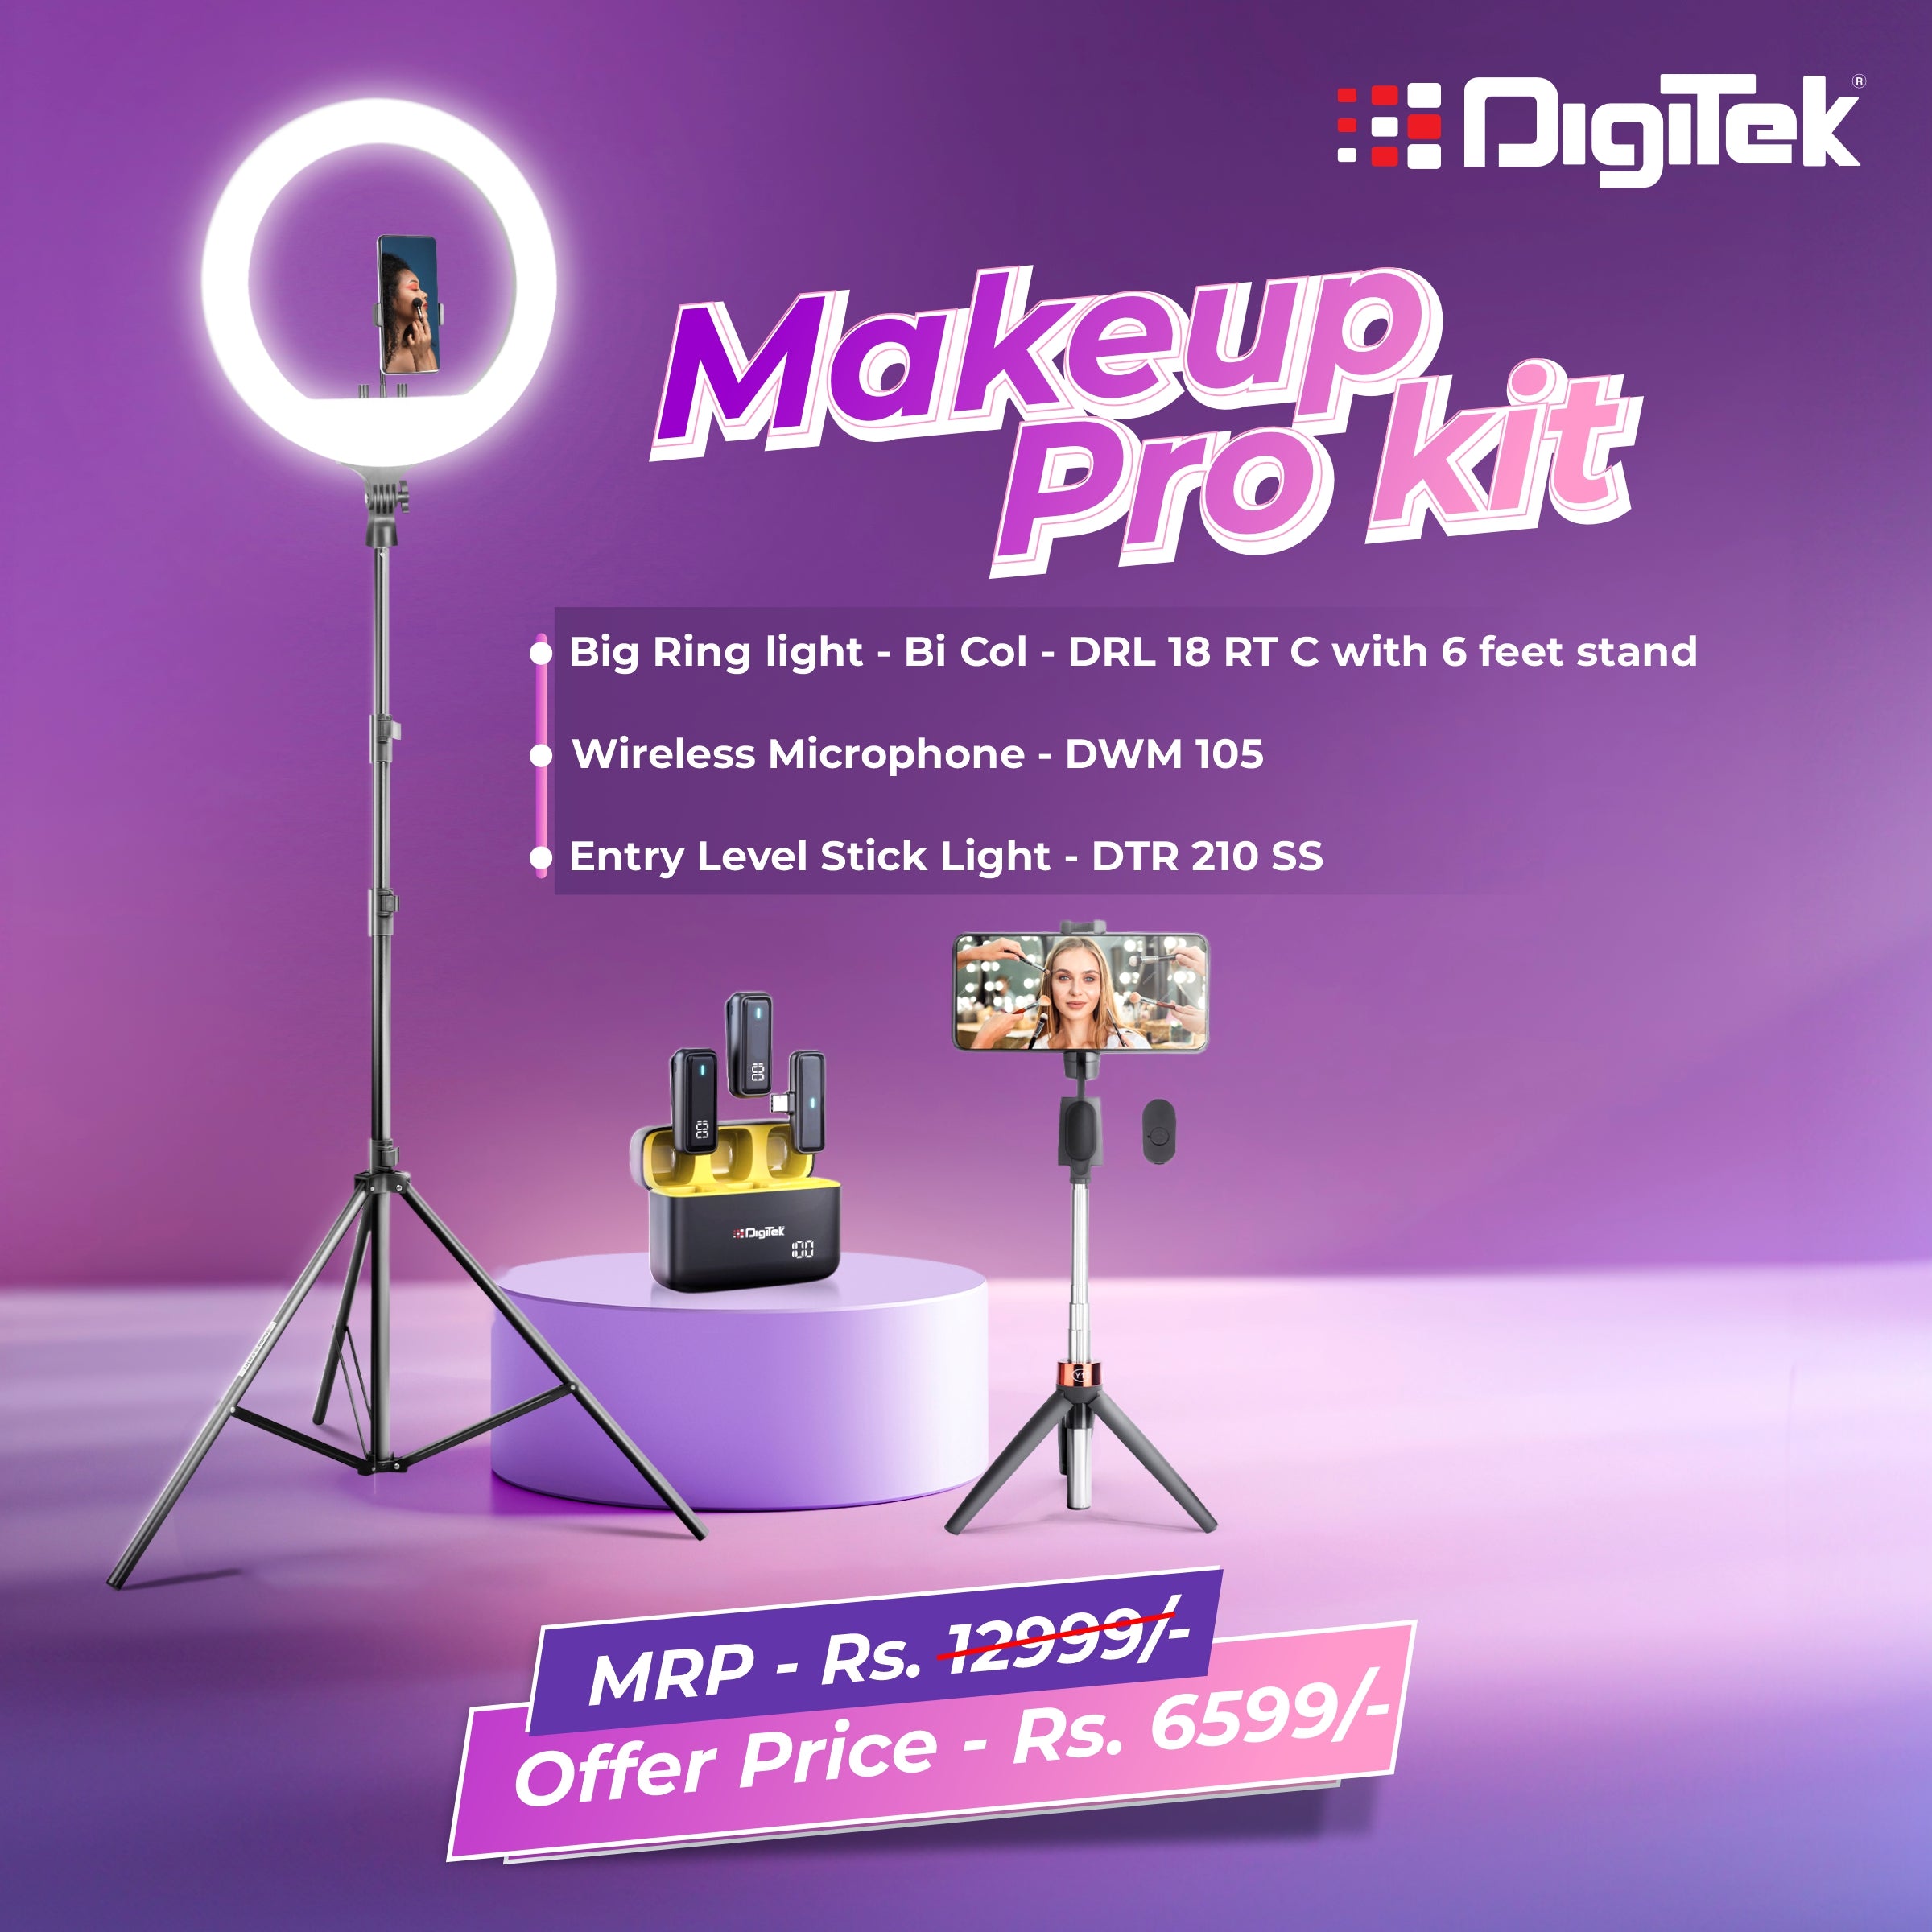 Makeup Pro kit